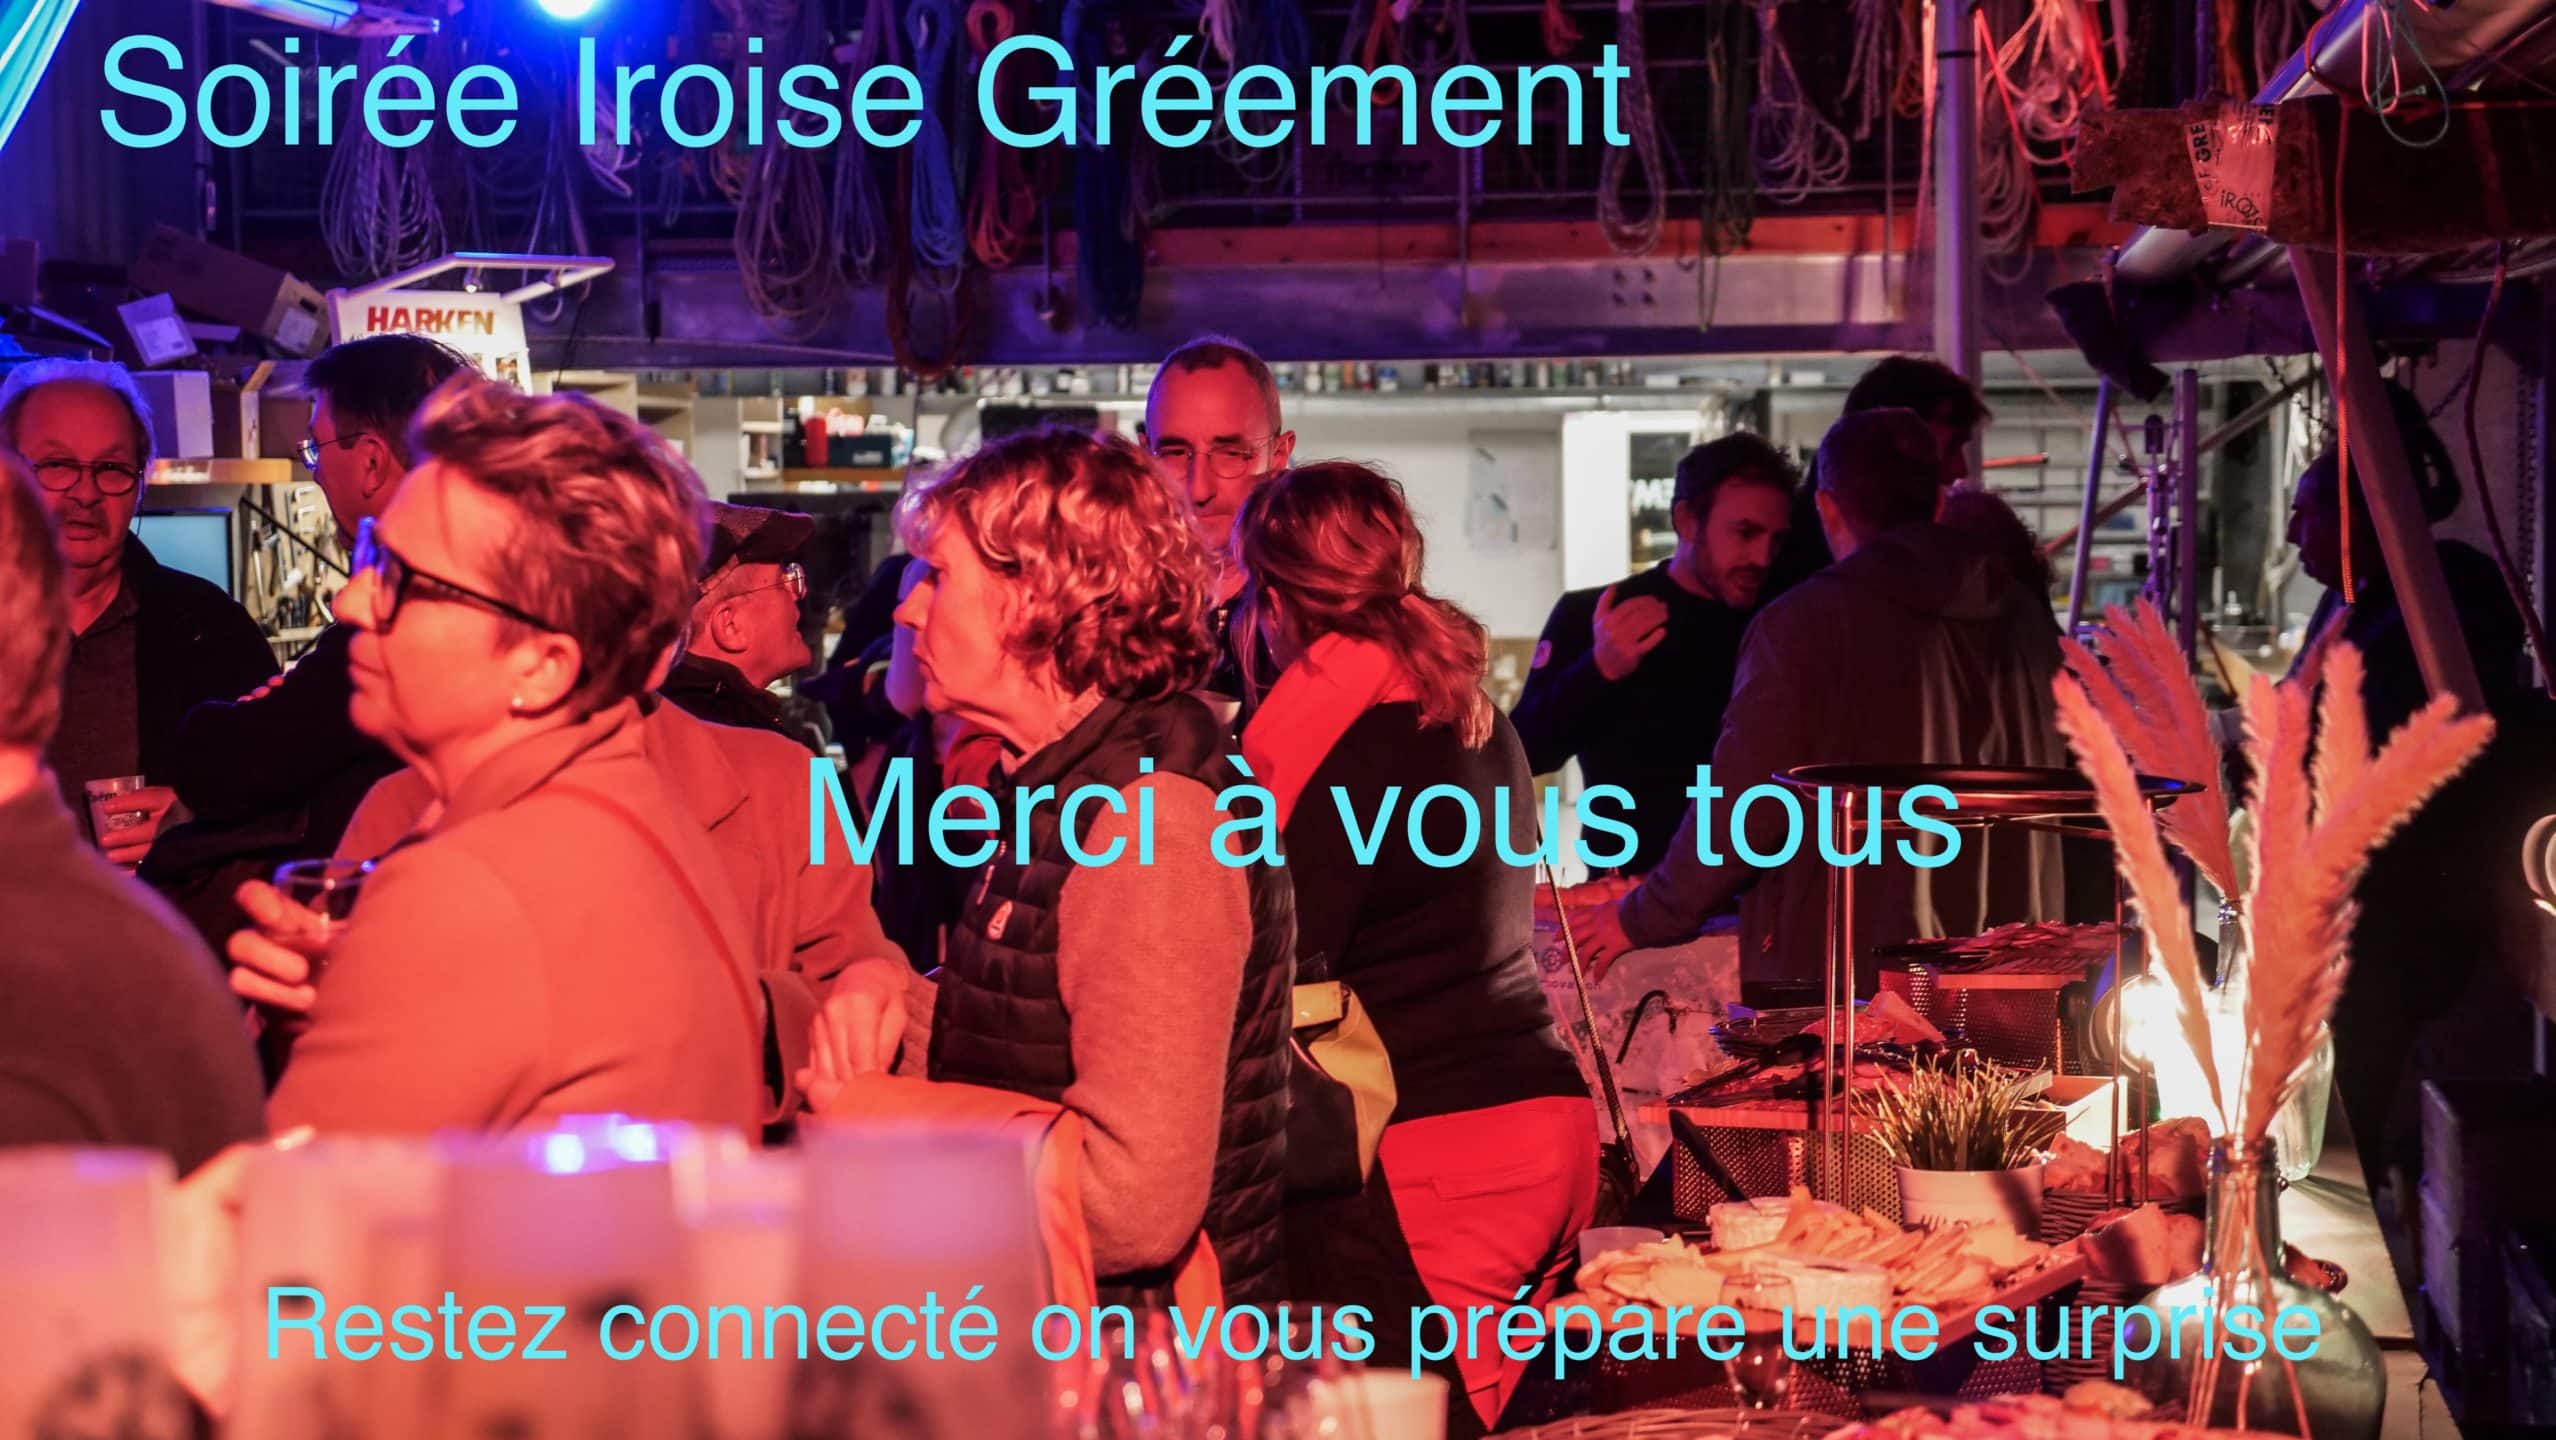 Iroise Greement remerciement soiree - Quimper Brest